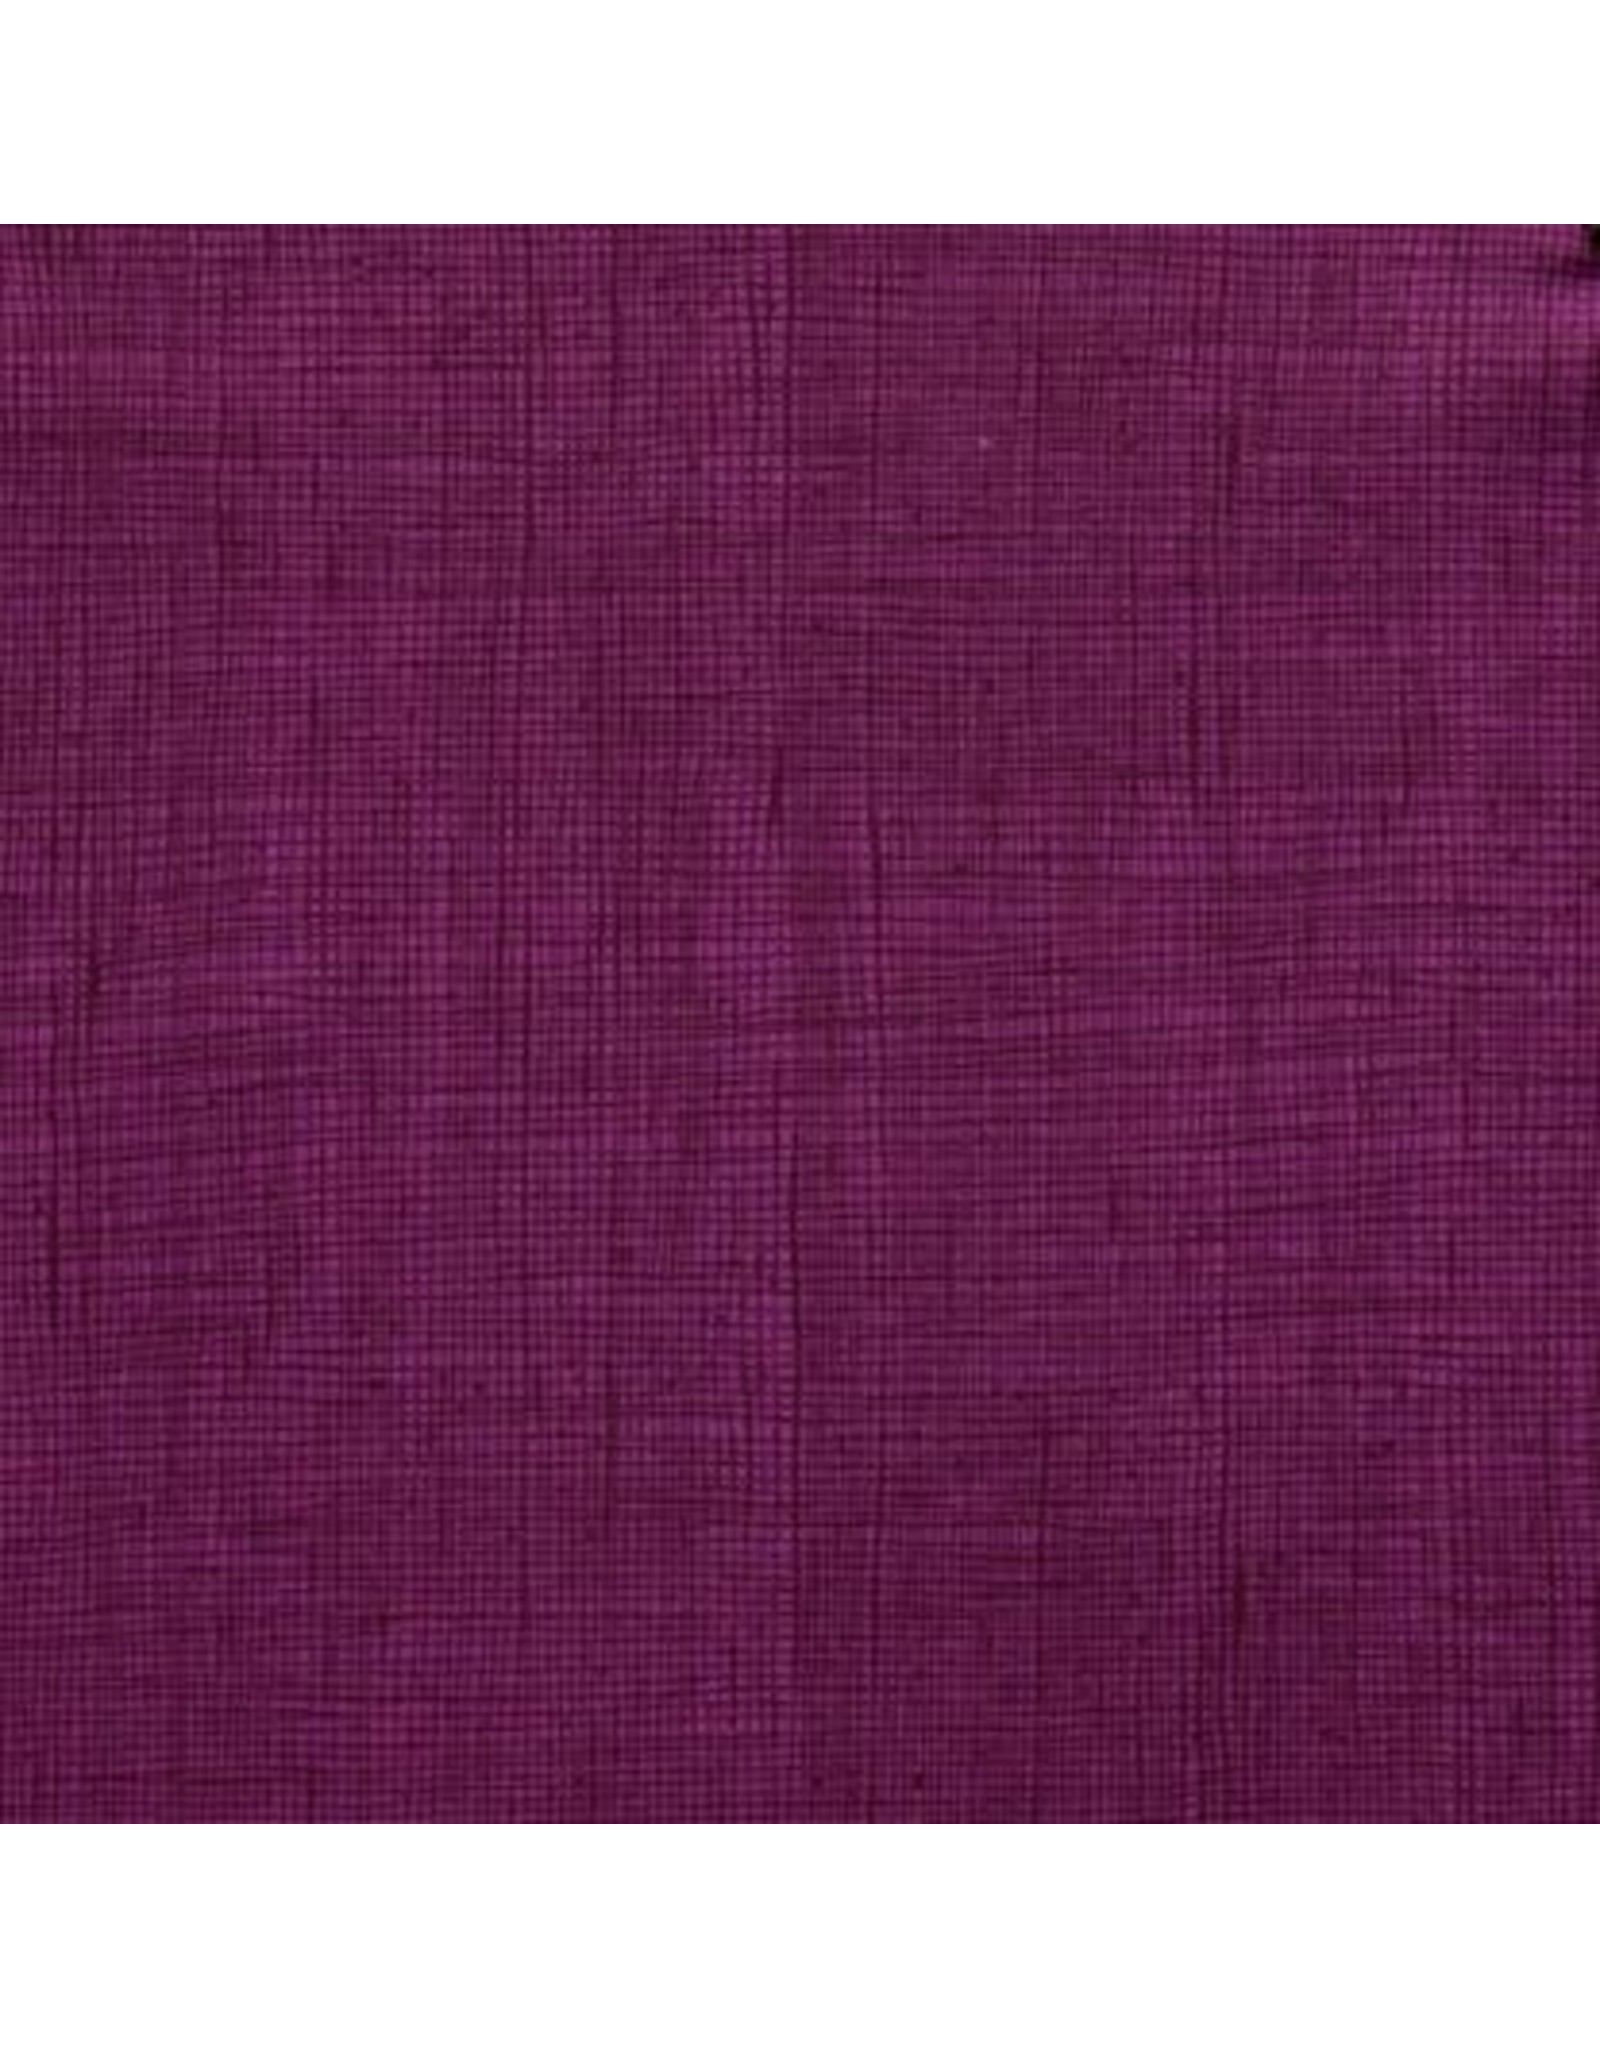 Alexander Henry Fabrics Heath in Violet, Fabric Half-Yards